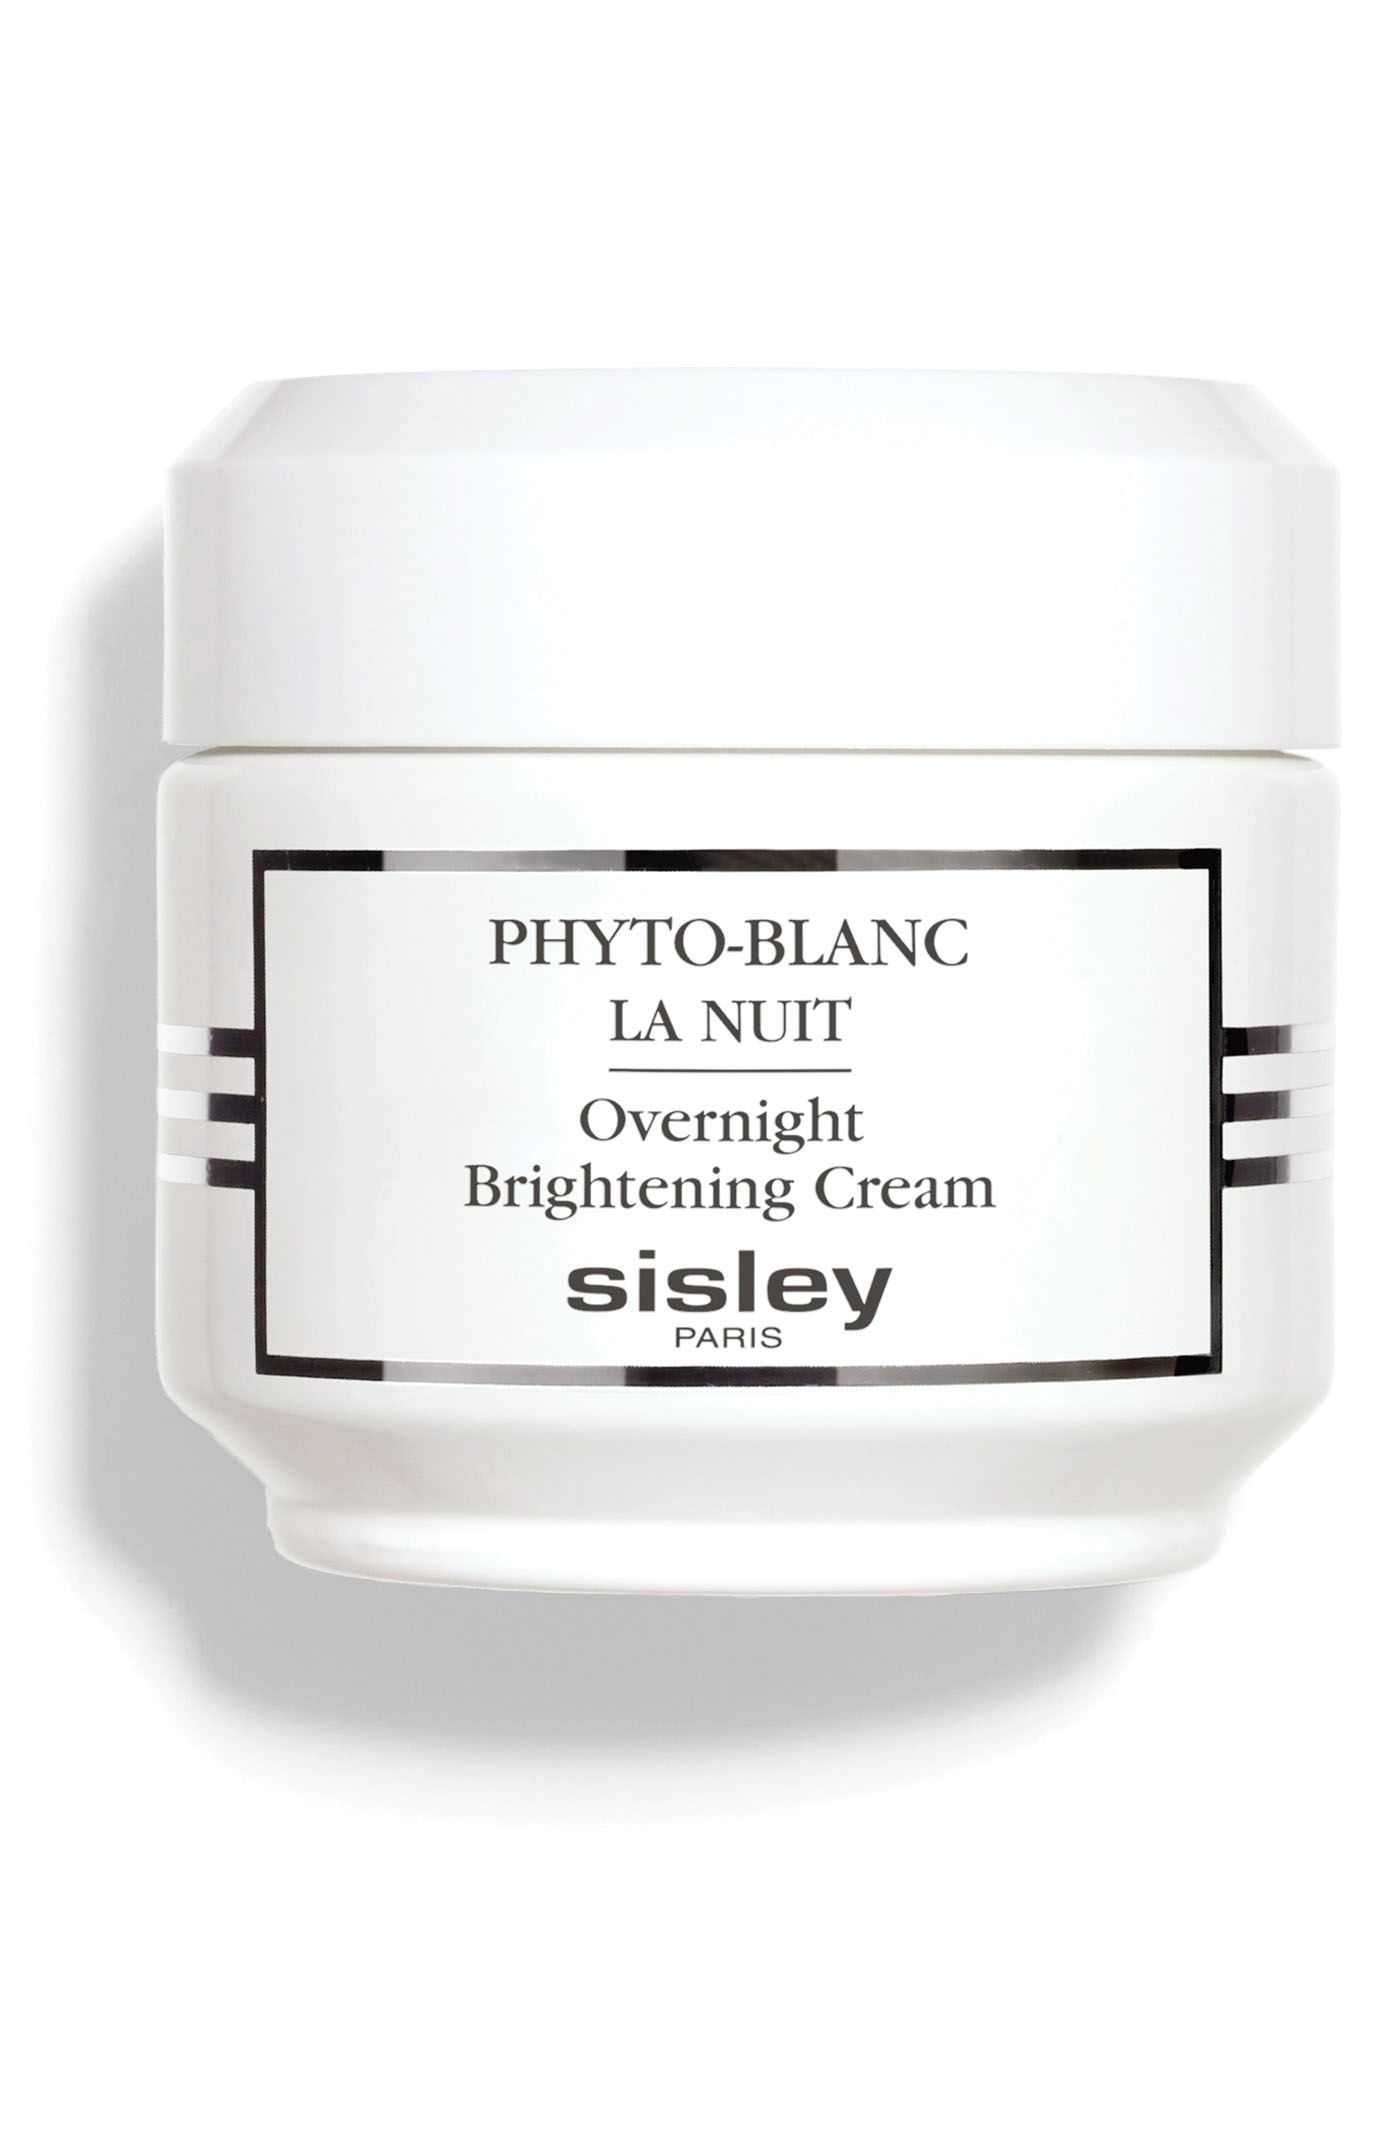 26 Sisley Paris, Phyto Blanc La Nuit Overnight Brightening Cream, Nordstrom.com